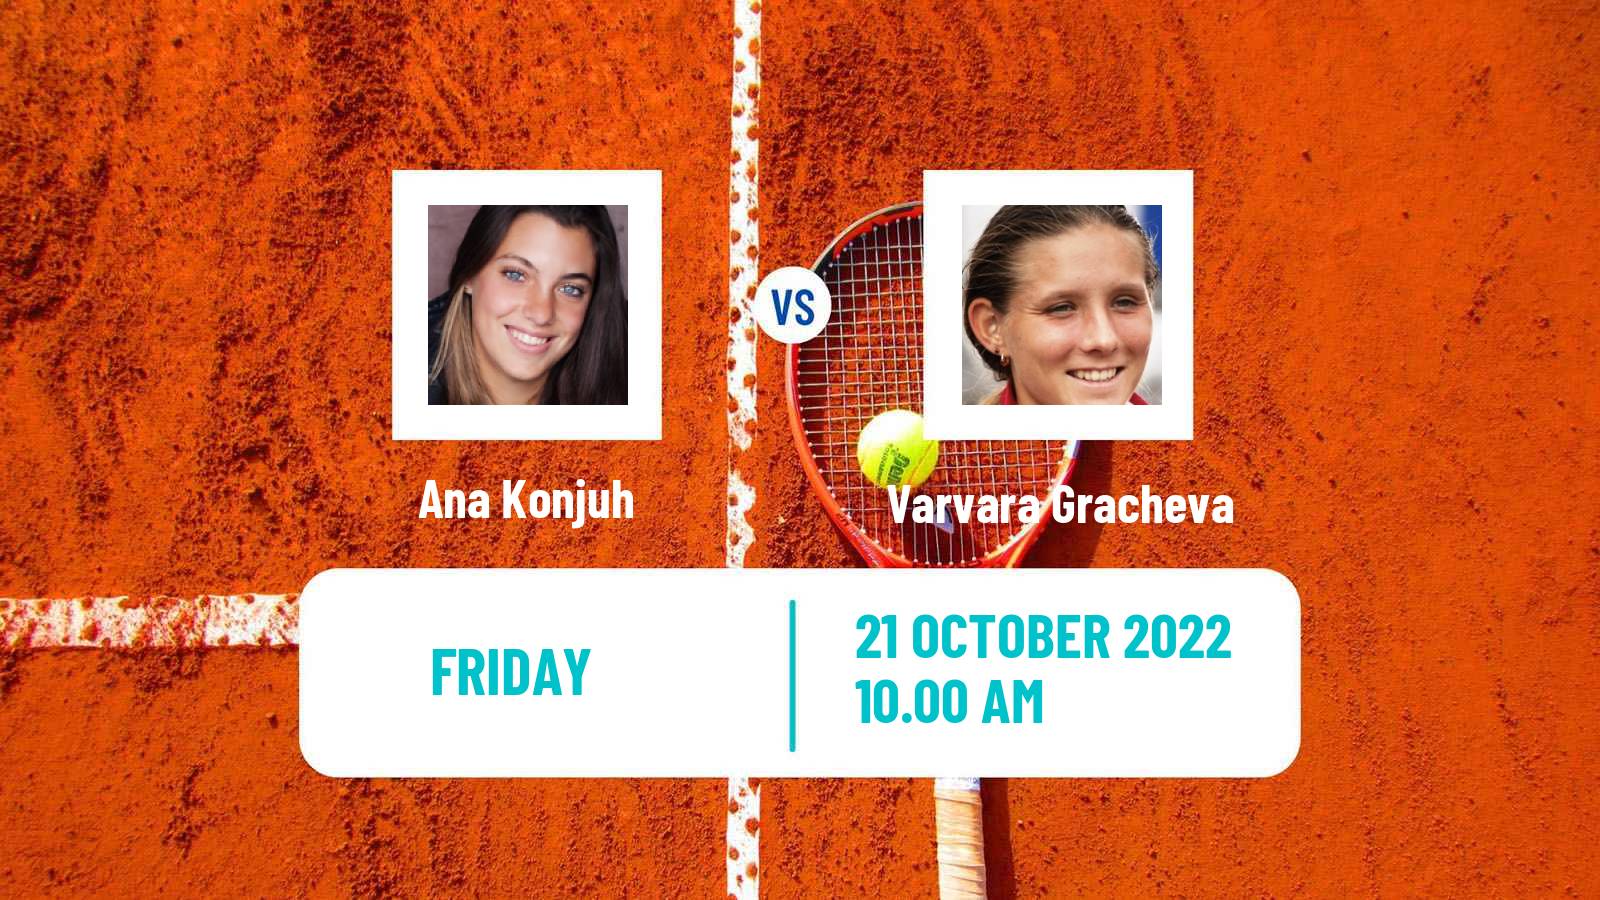 Tennis ATP Challenger Ana Konjuh - Varvara Gracheva